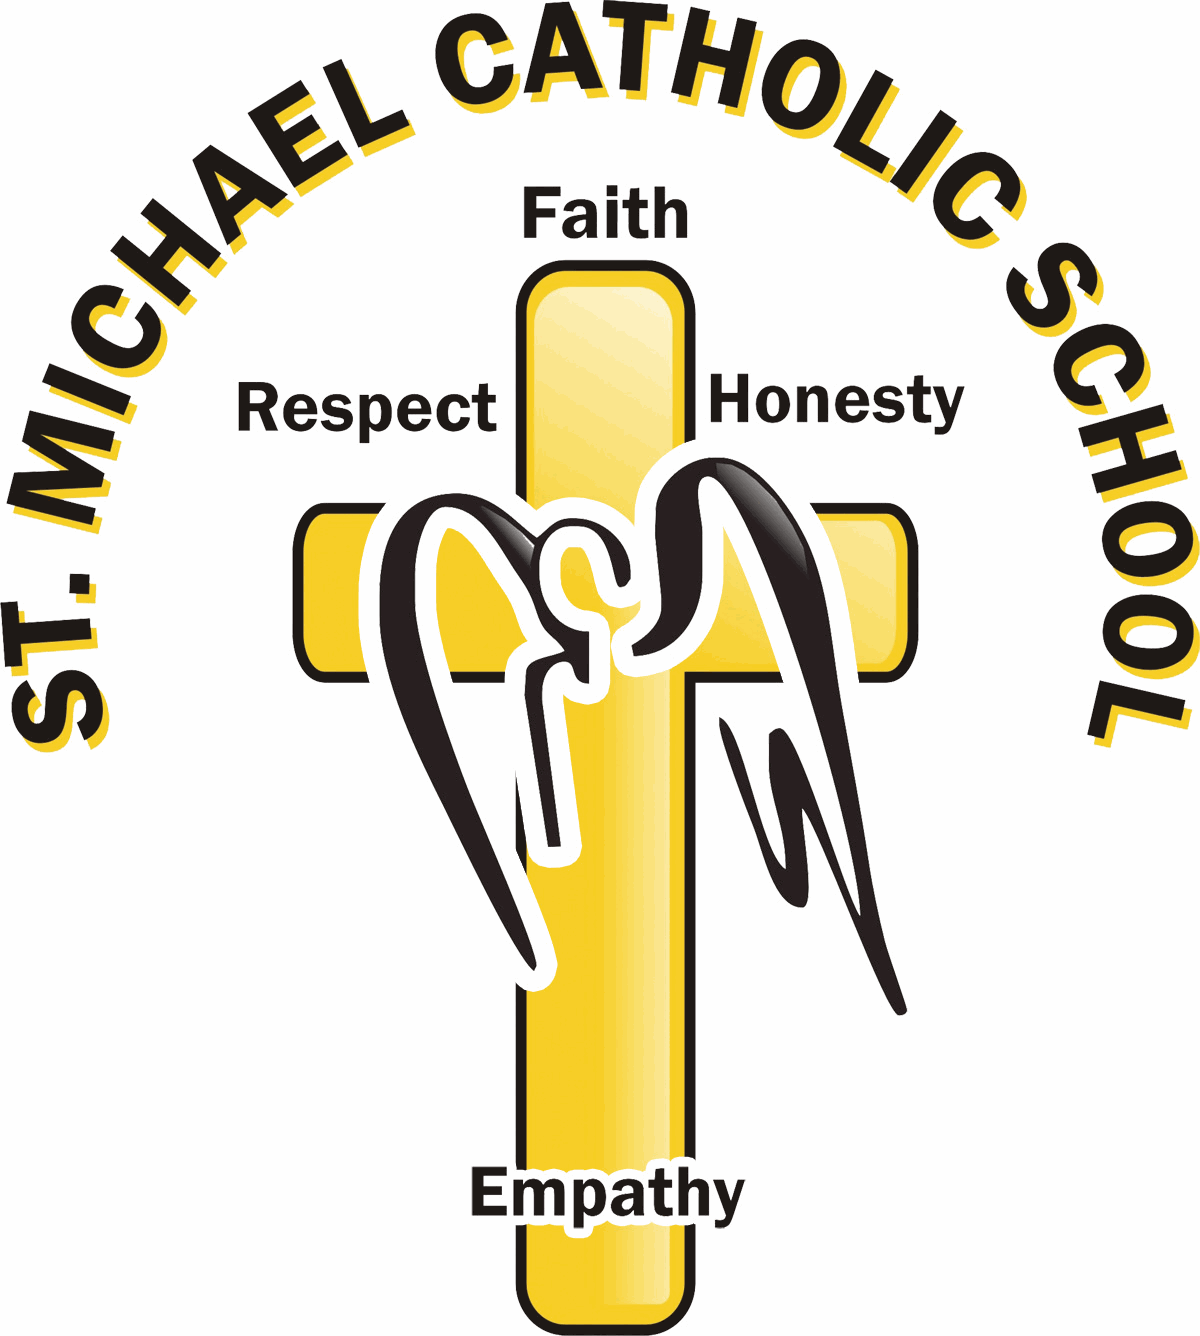 St. Michael Catholic School